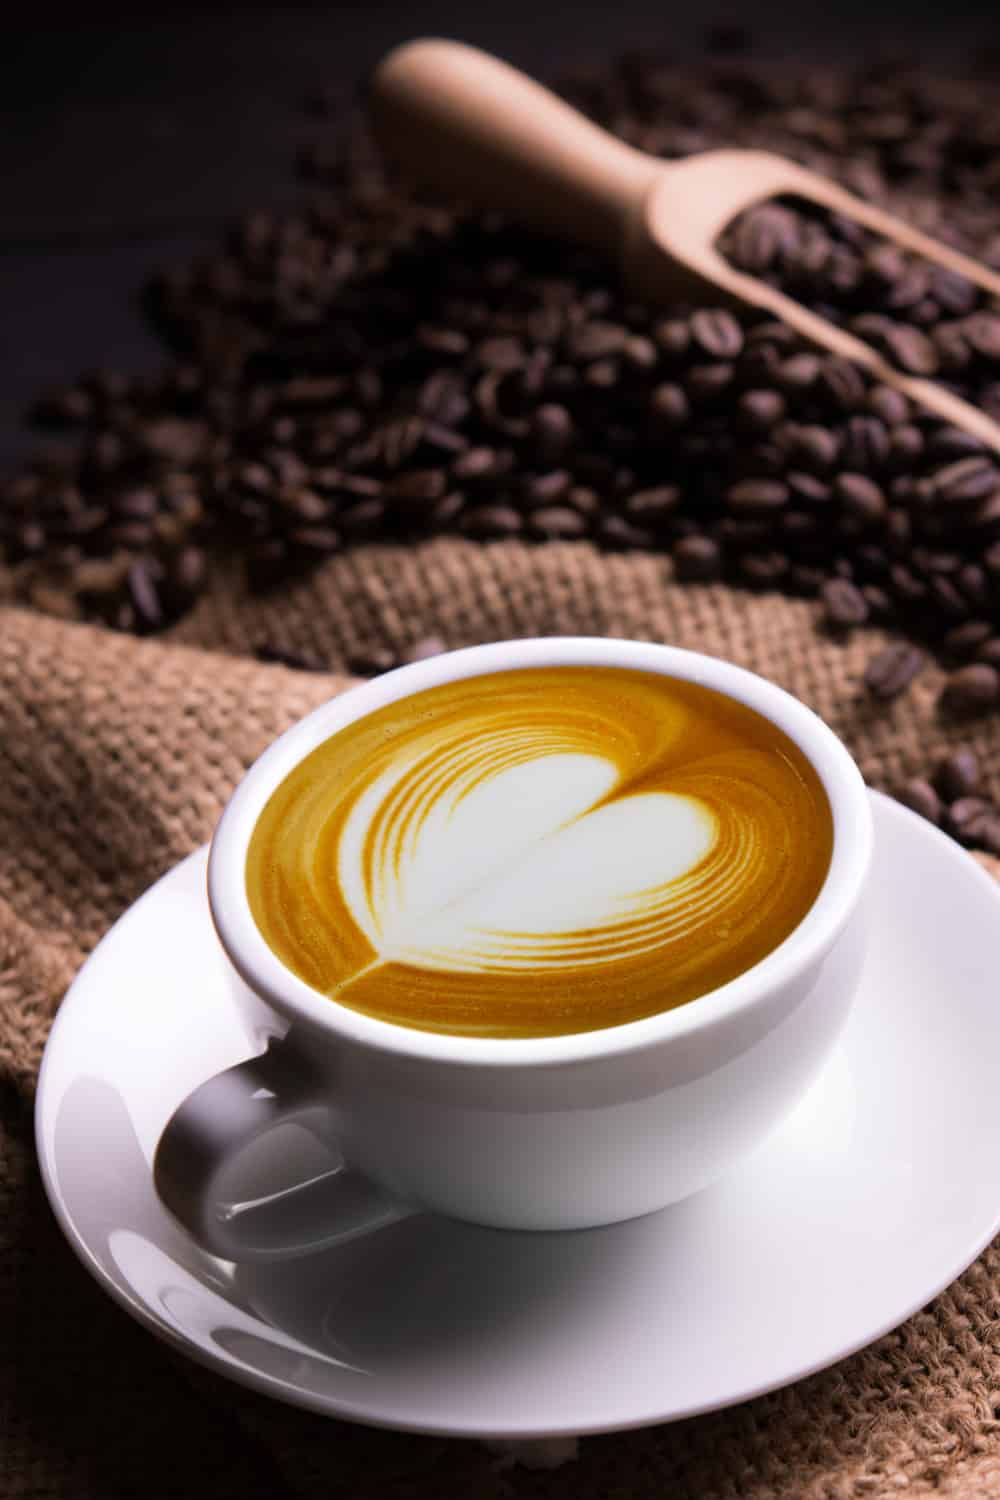 Decaf coffee still contains caffeine